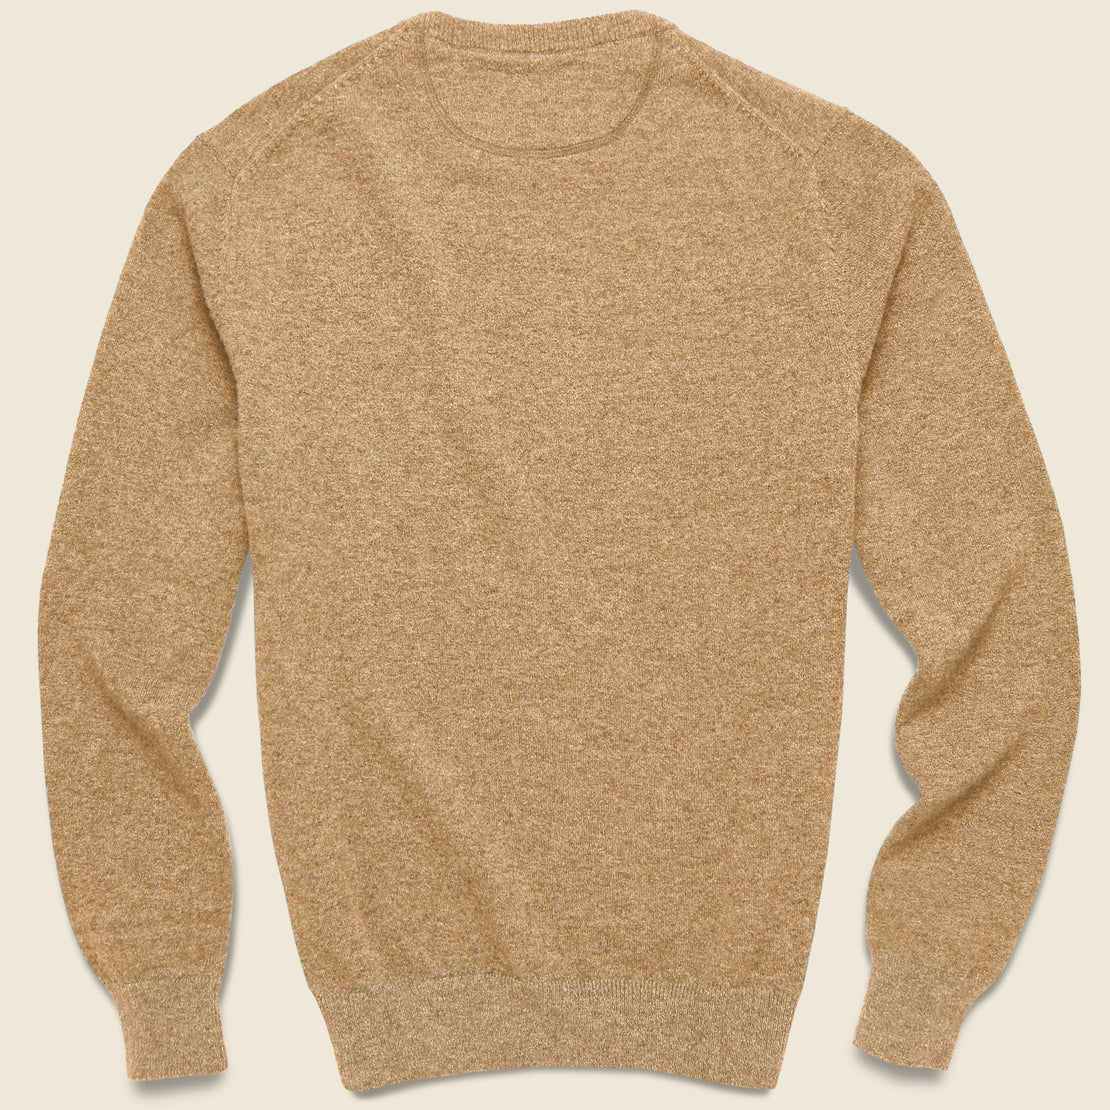 Jackson Crew Sweater - Wheat Heather